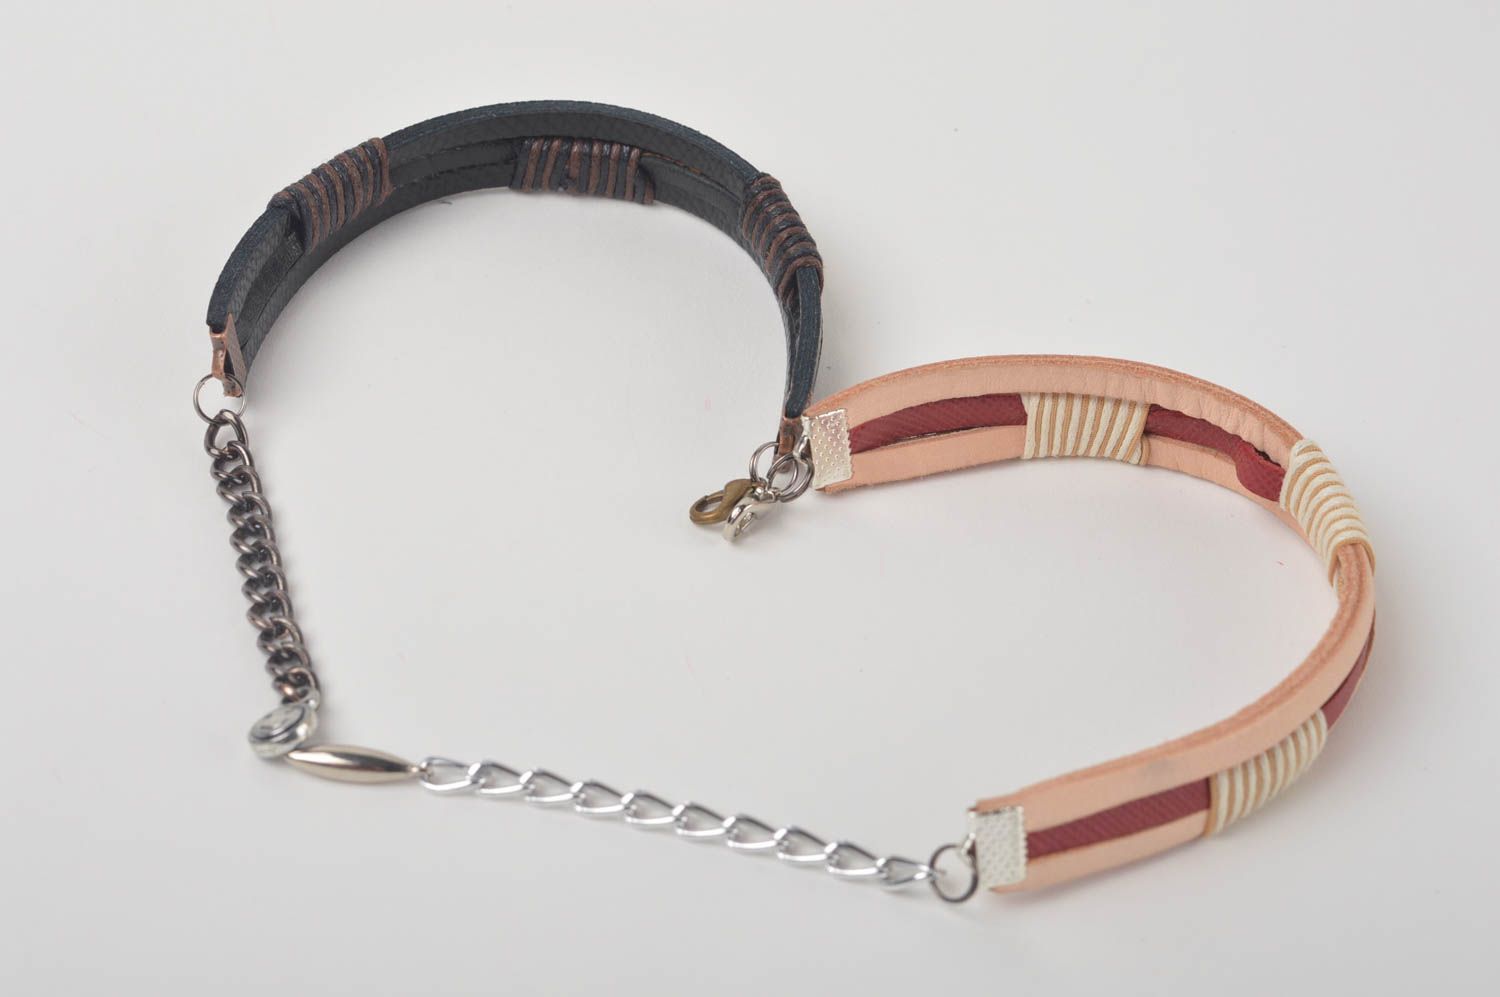 Unusual handmade leather bracelets wrist bracelet designs 2 pieces cool jewelry photo 4